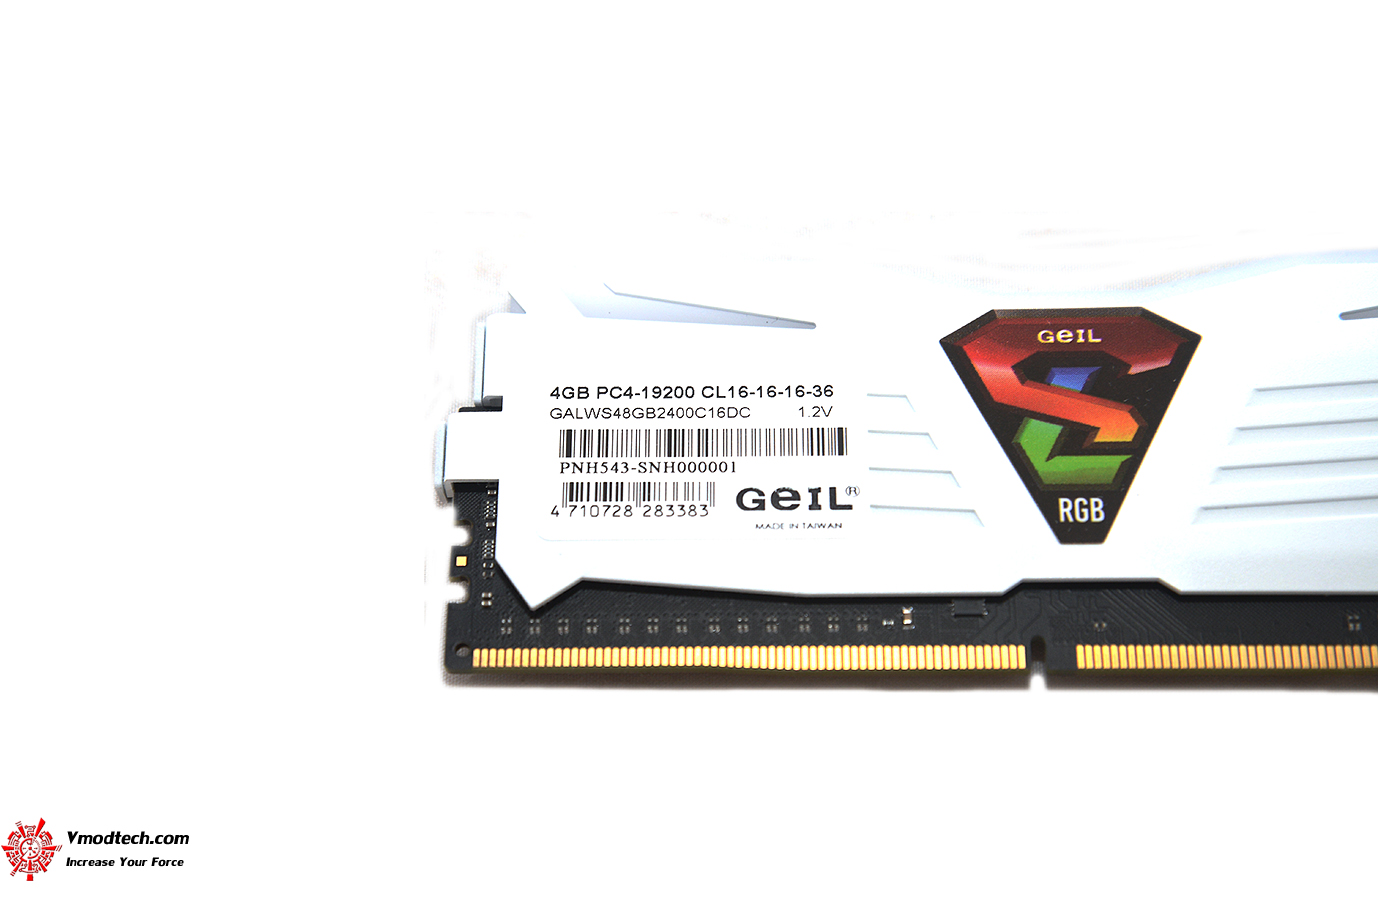 dsc 8626 GEIL SUPER LUCE RGB SYNC Series DDR4 2400Mhz RGB Gaming Memory Review